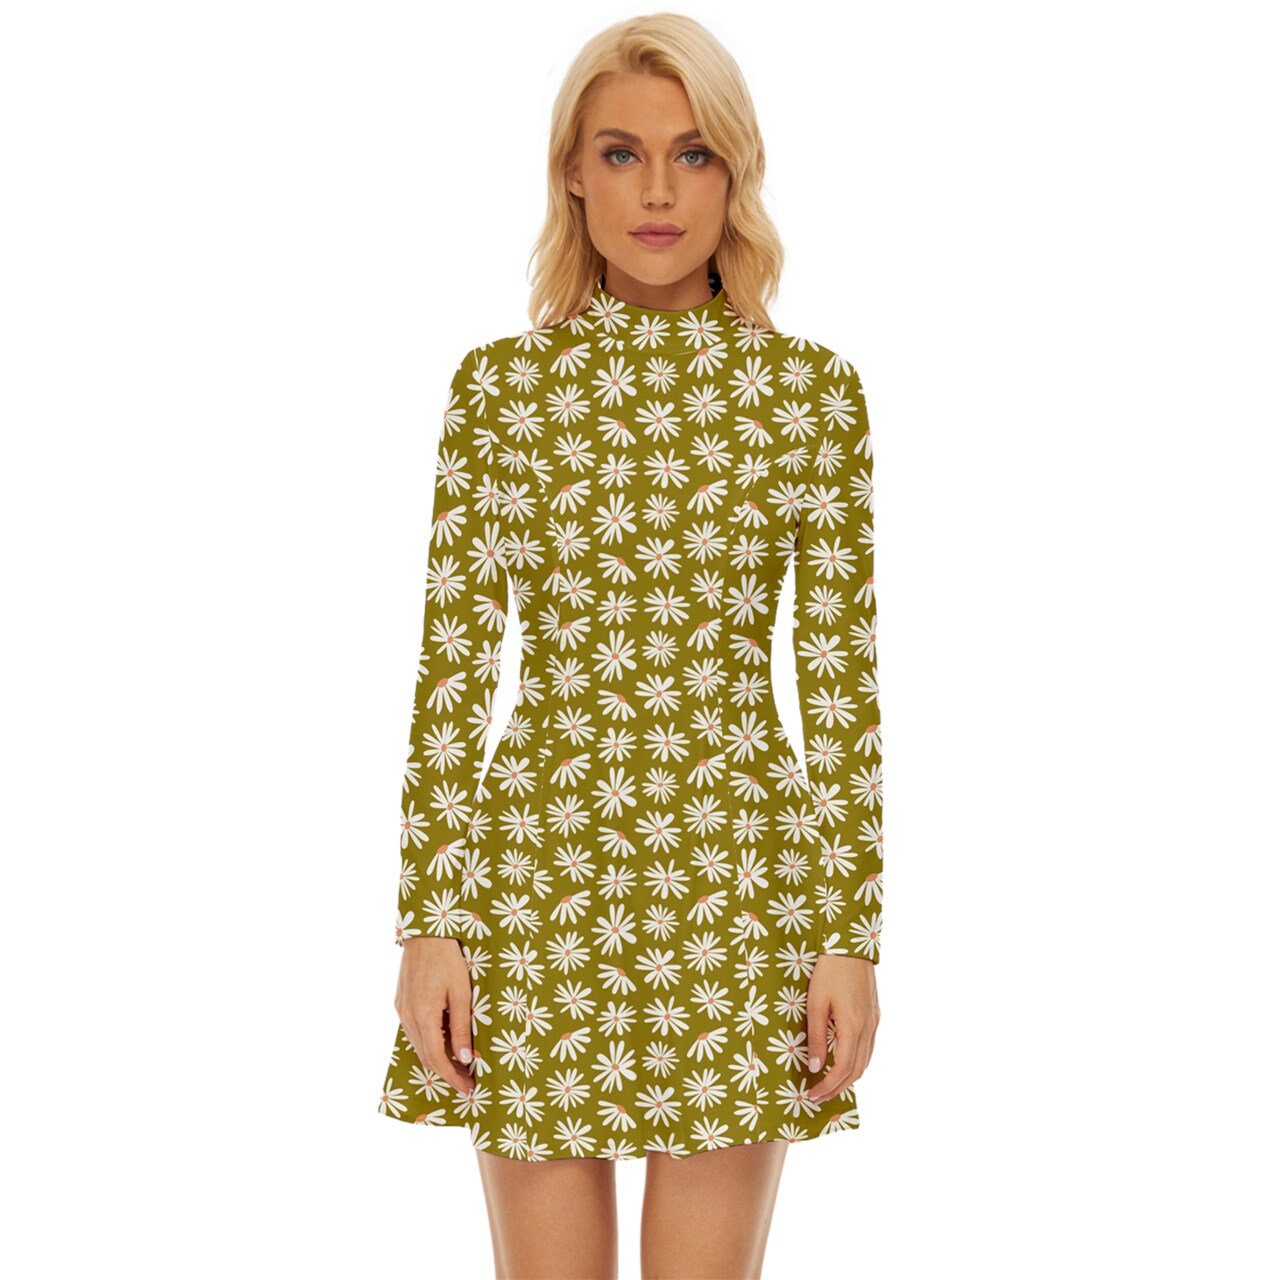 60er-Kleiderstil, Mod-Kleid, grünes Mod-Kleid, Rollkragenkleid, GOGO-Kleid, Kleid im 60er-Jahre-Stil, 60er-Minikleid, olivgrünes Kleid, Retro-Kleid